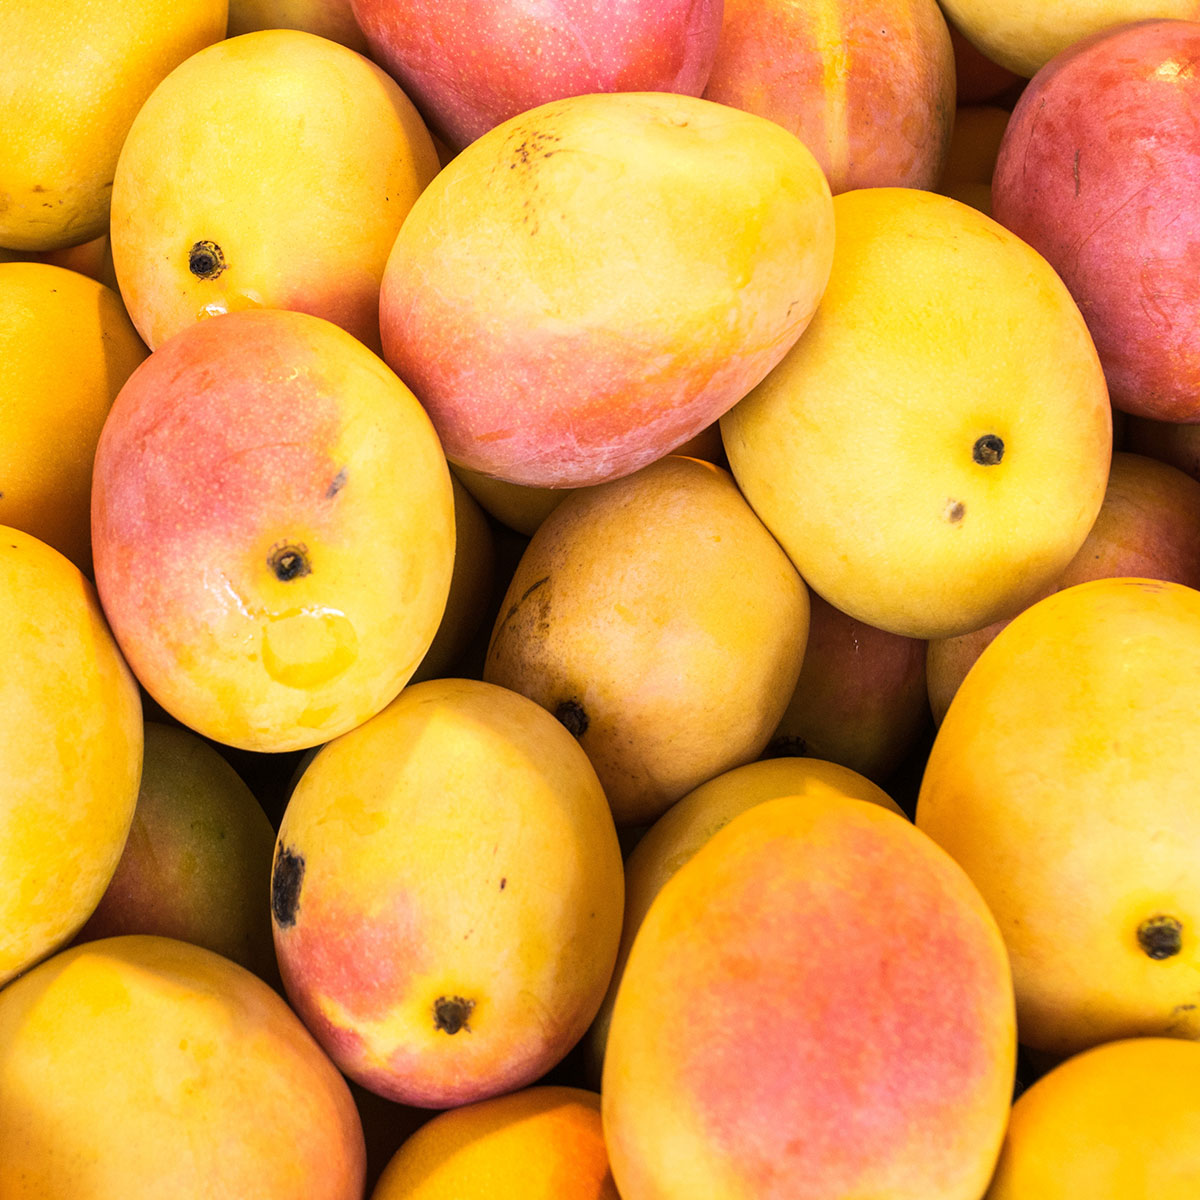 Mango Fruit - Tropical and Juicy